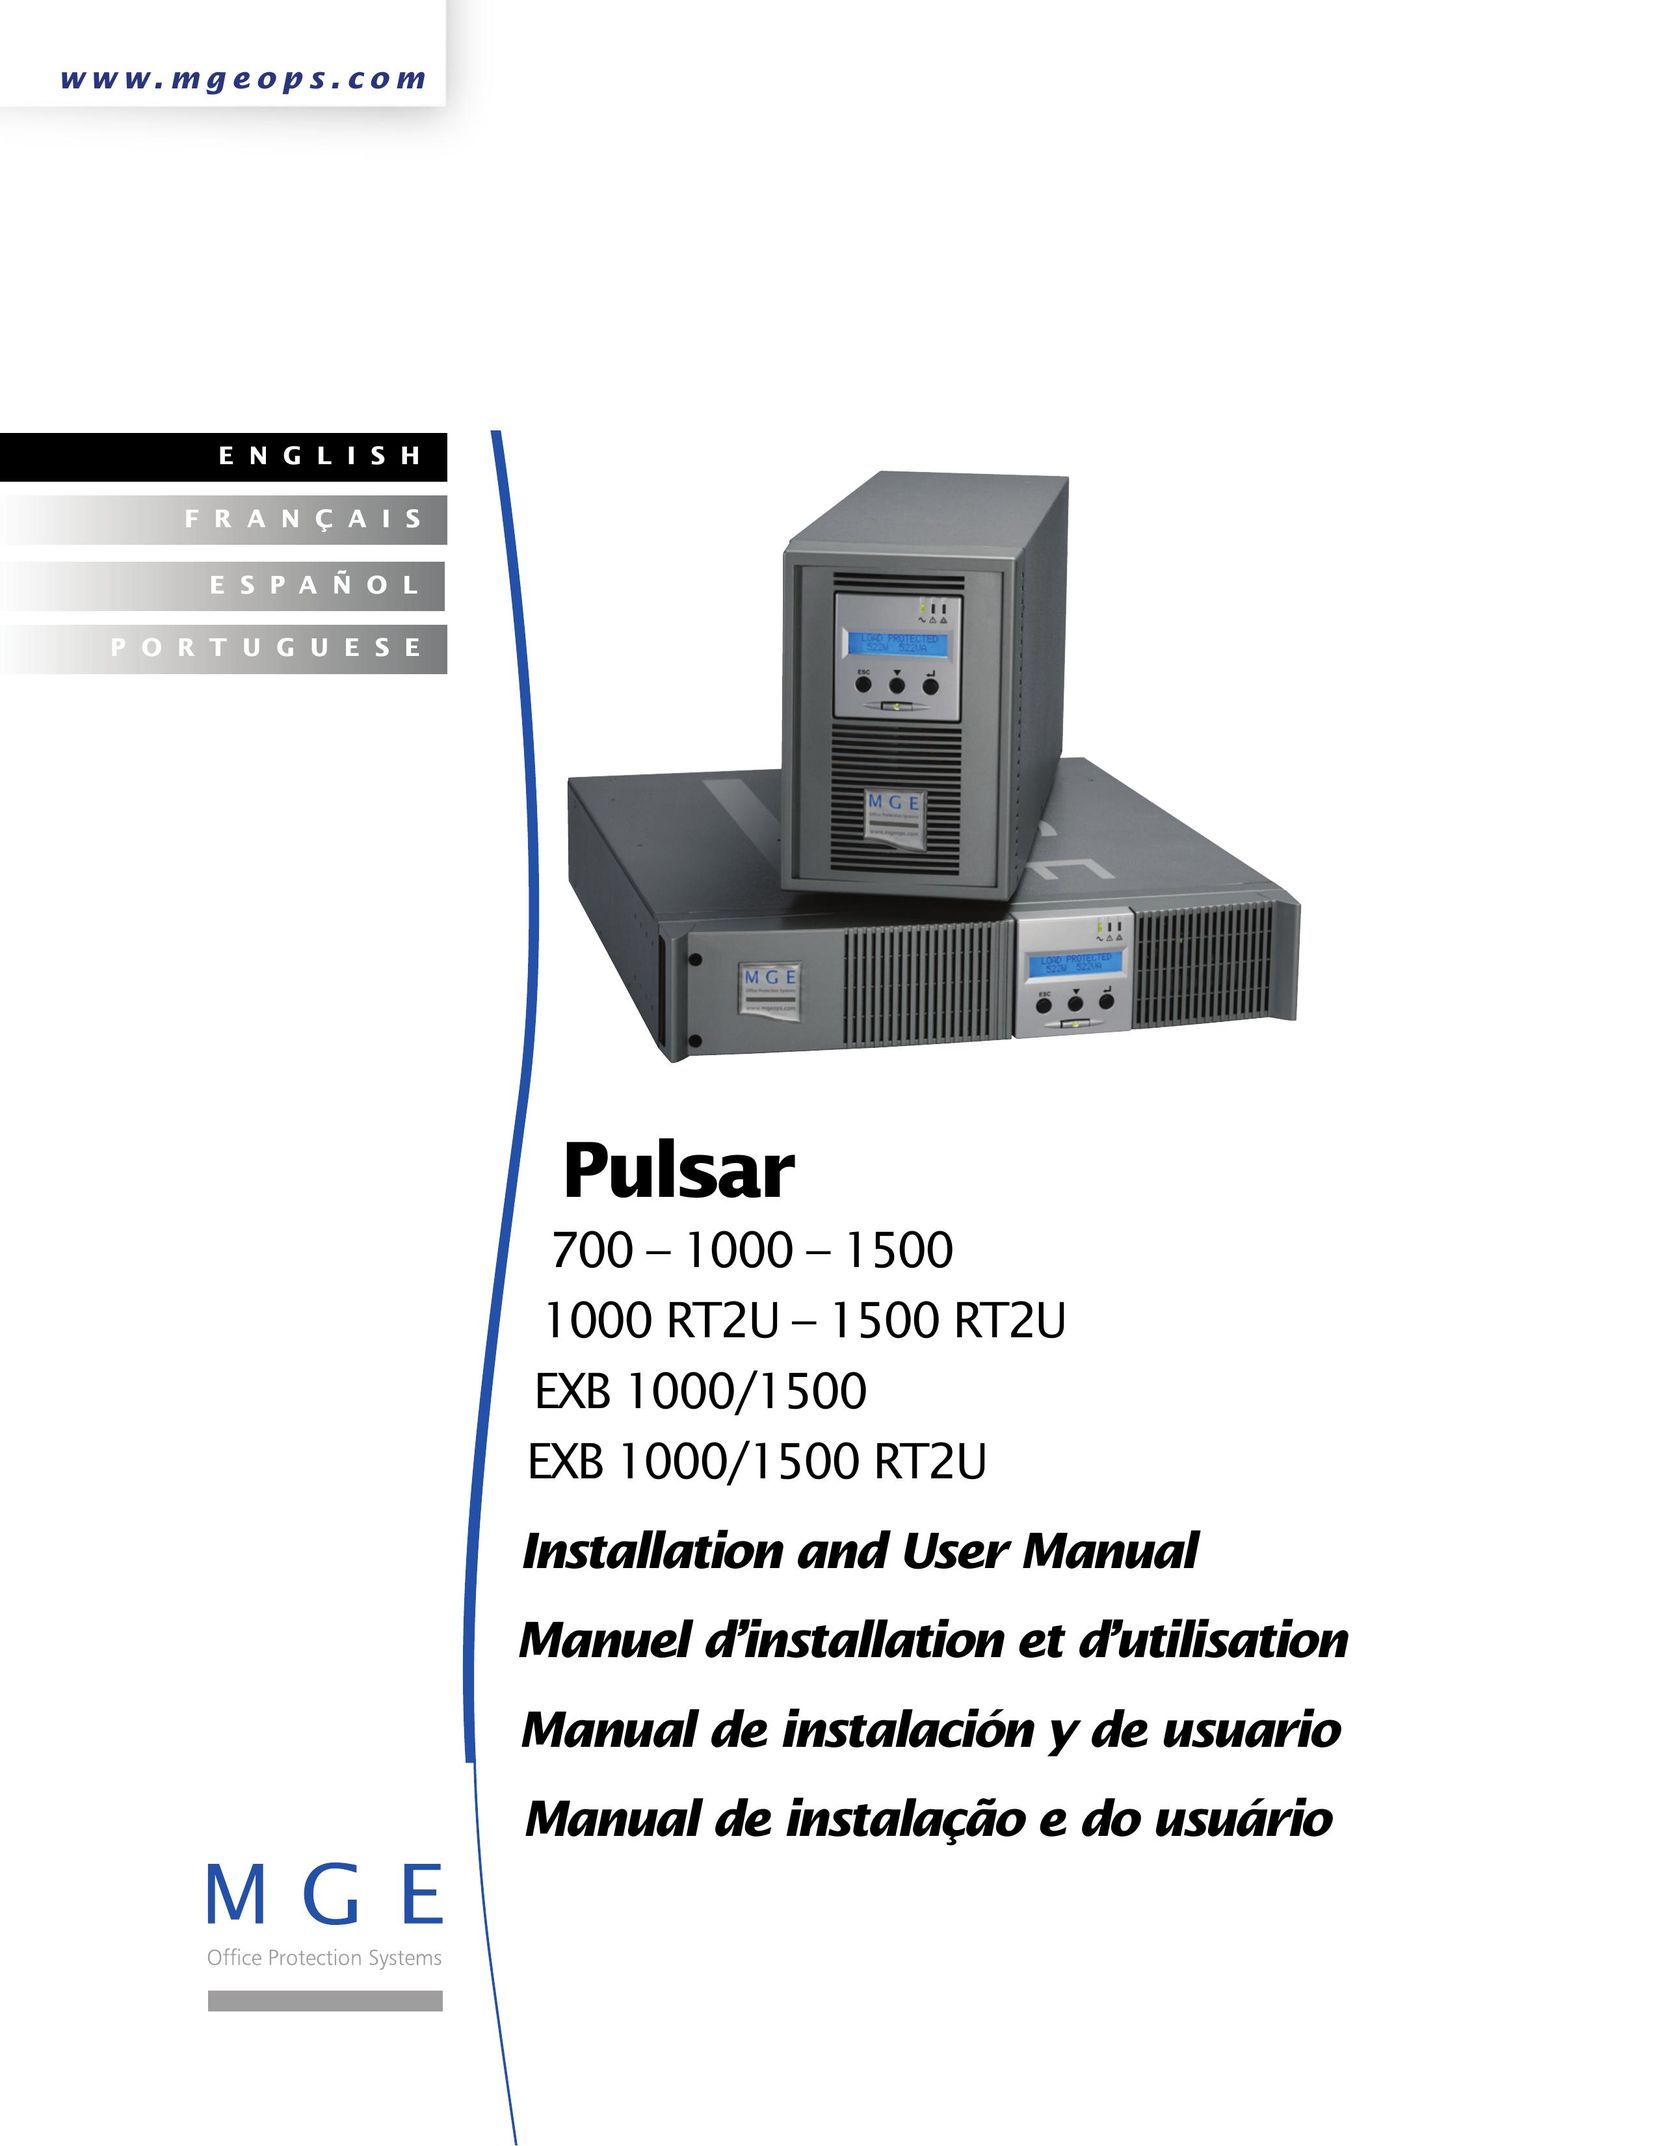 MGE UPS Systems 1500 RT2U Power Supply User Manual